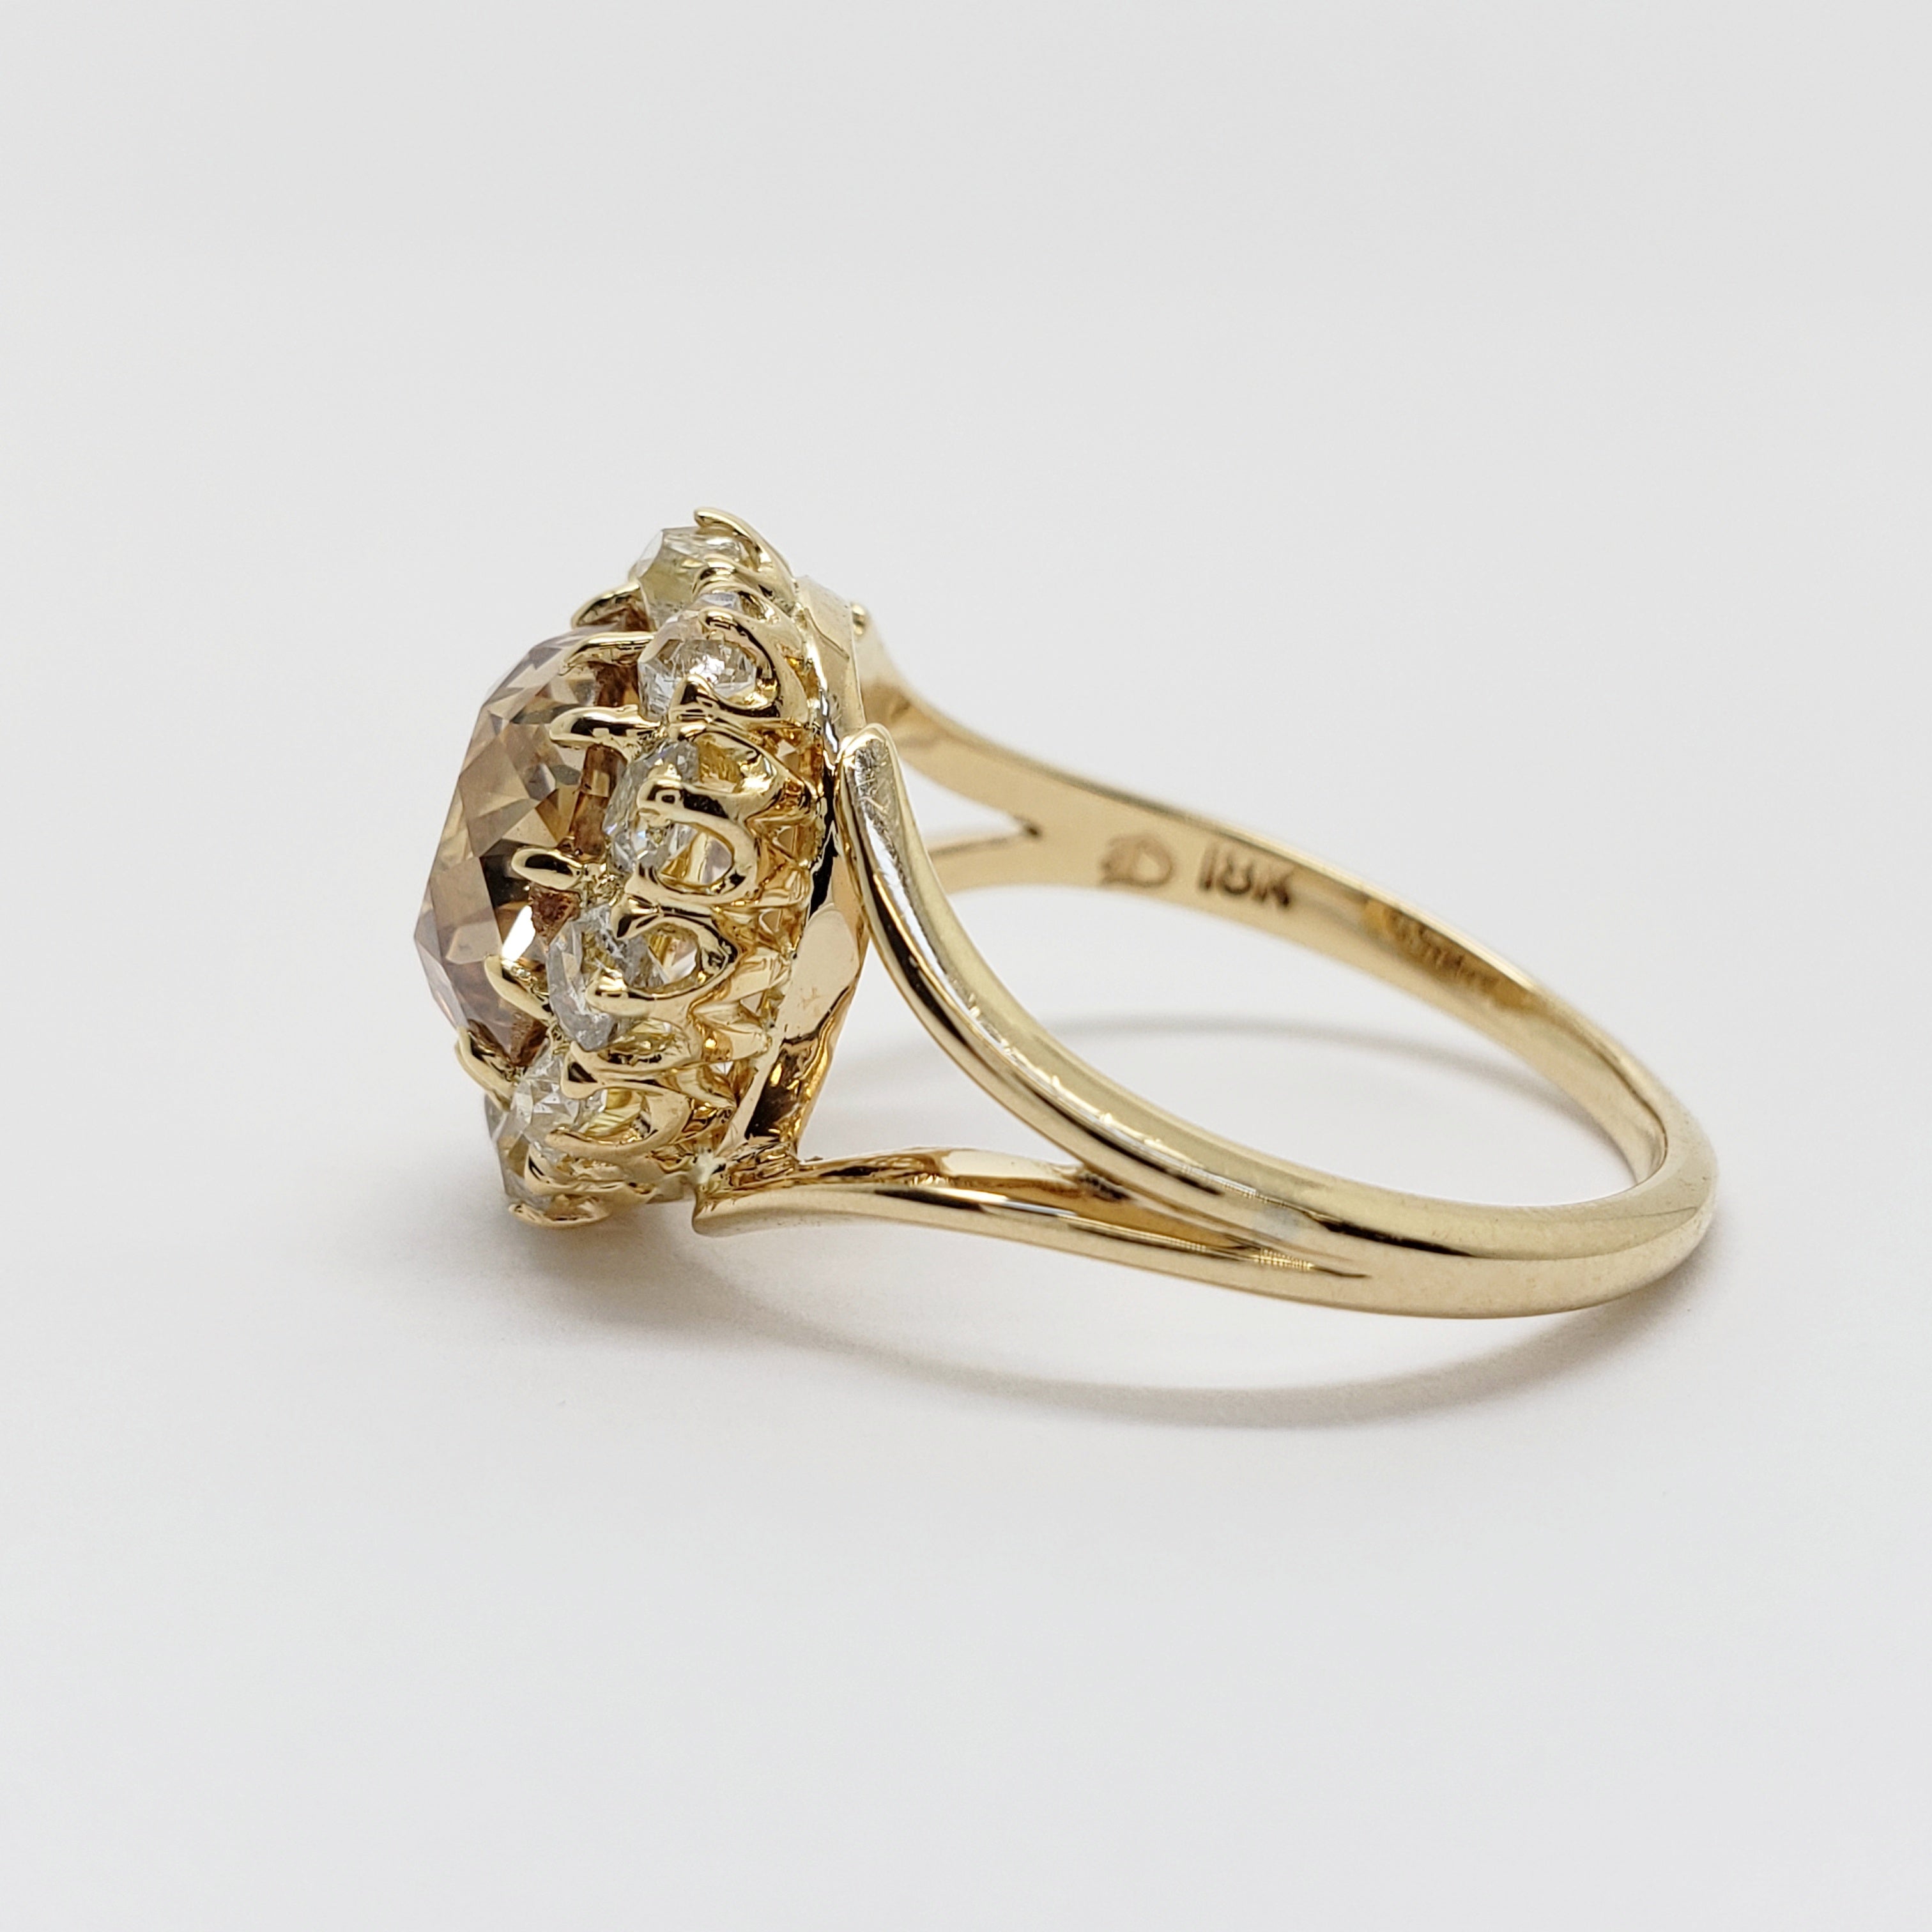 Antique Old Mine Cut Diamond Ring | Era Design Vancouver Canada